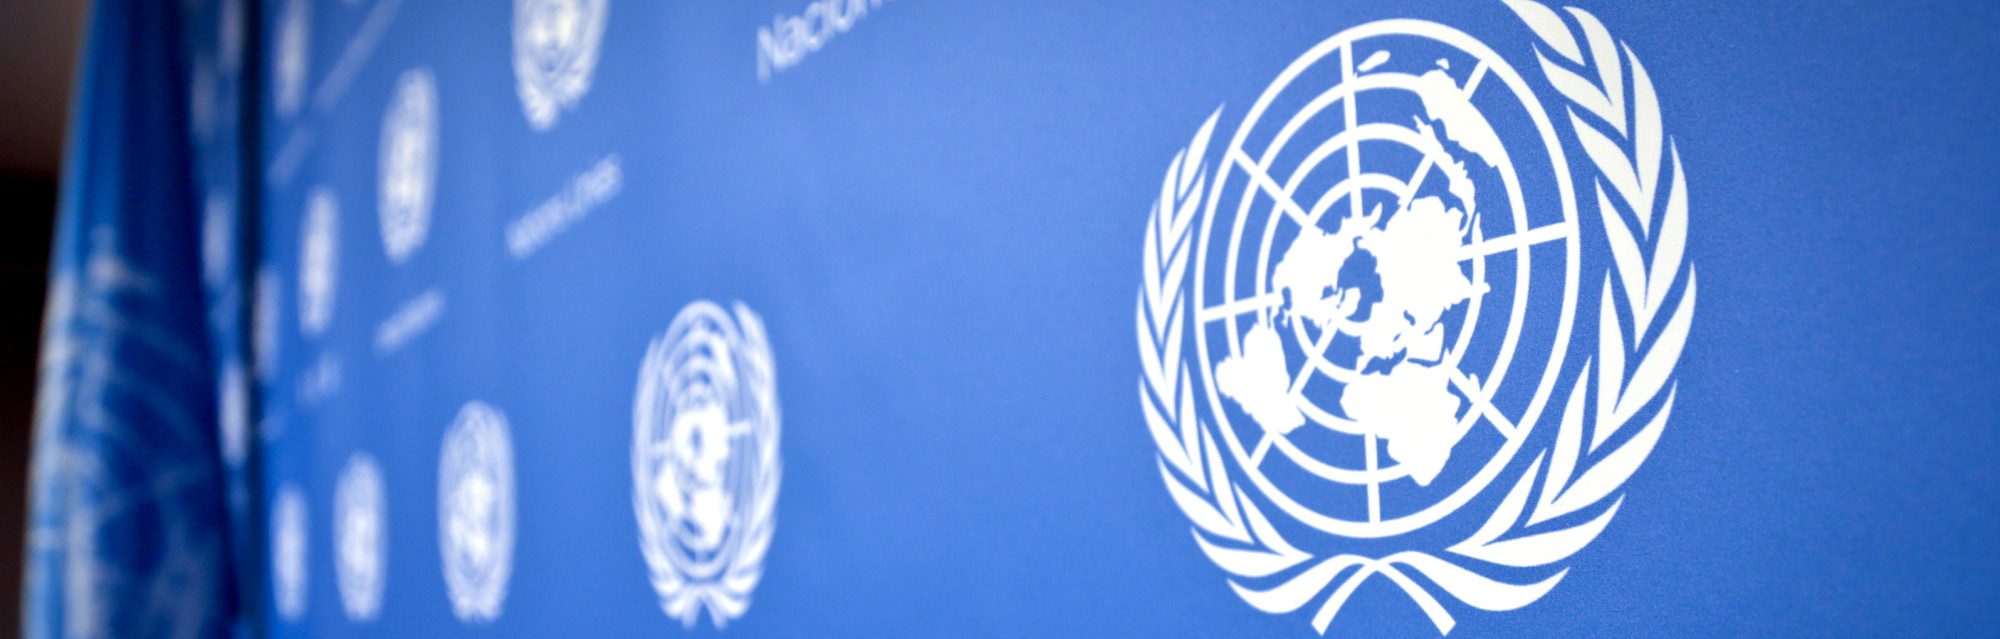 Оон одобрила. ООН совет безопасности Женева. День ООН. Прав человека ООН. Международное право ООН.